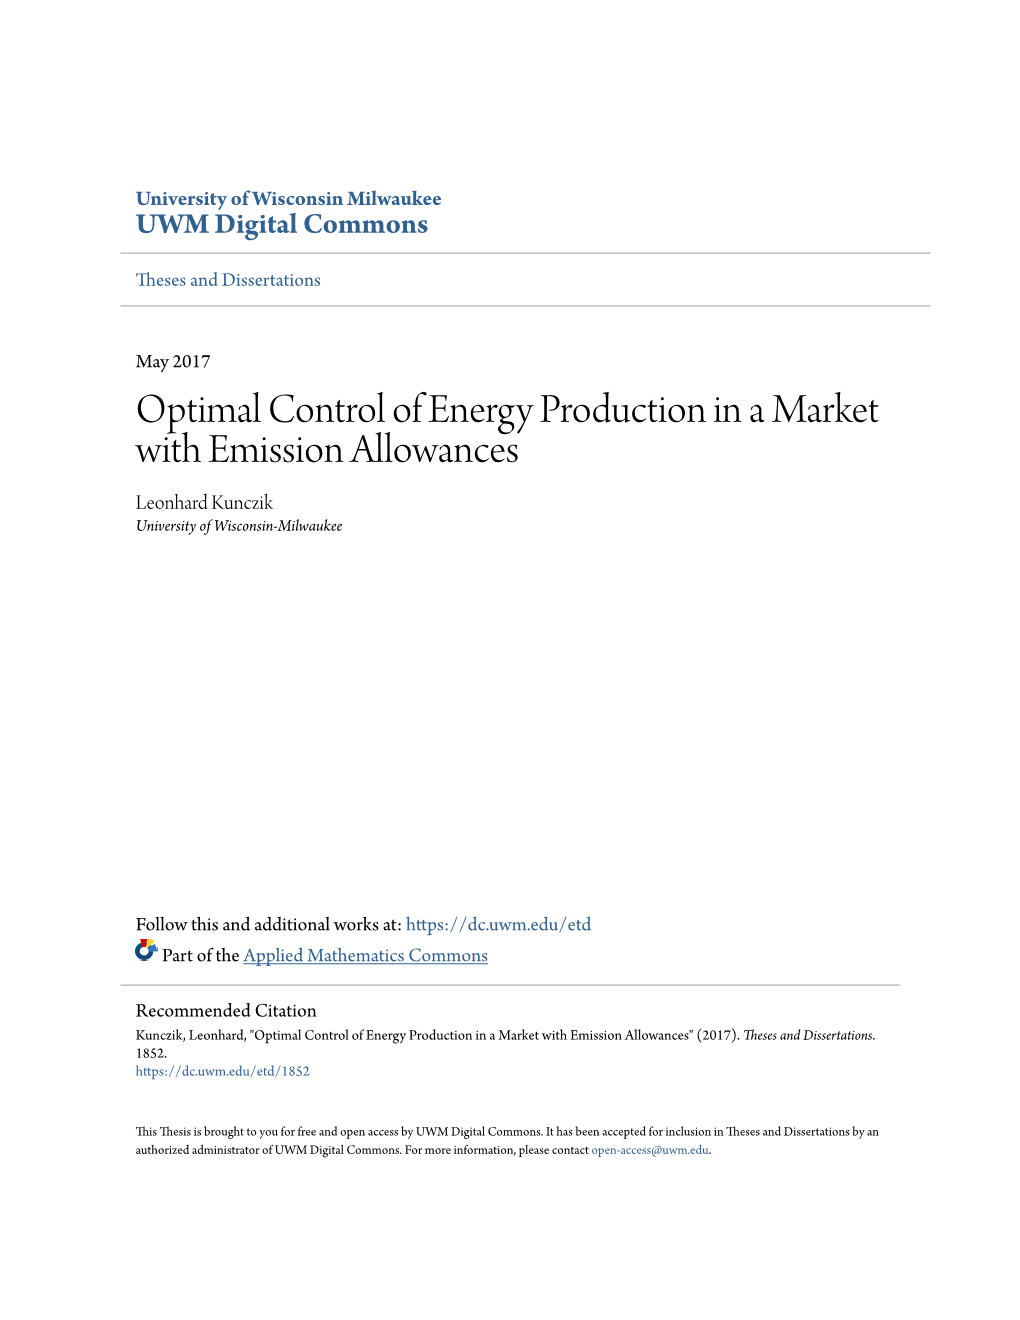 Optimal Control of Energy Production in a Market with Emission Allowances Leonhard Kunczik University of Wisconsin-Milwaukee